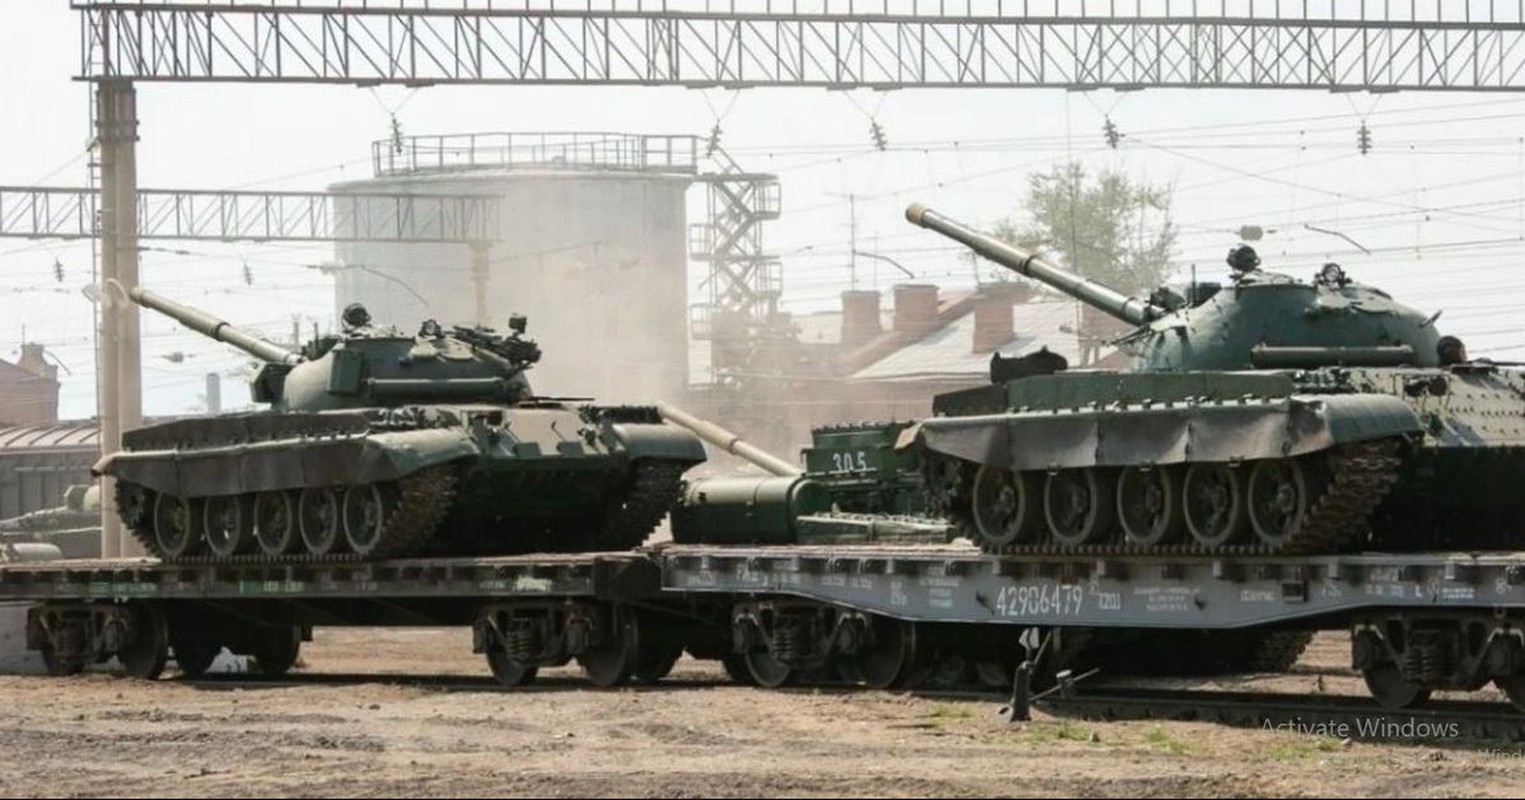 T-64 la xe tang chu luc cua Ukraine, vay T-64 cua Nga o dau?-Hinh-7